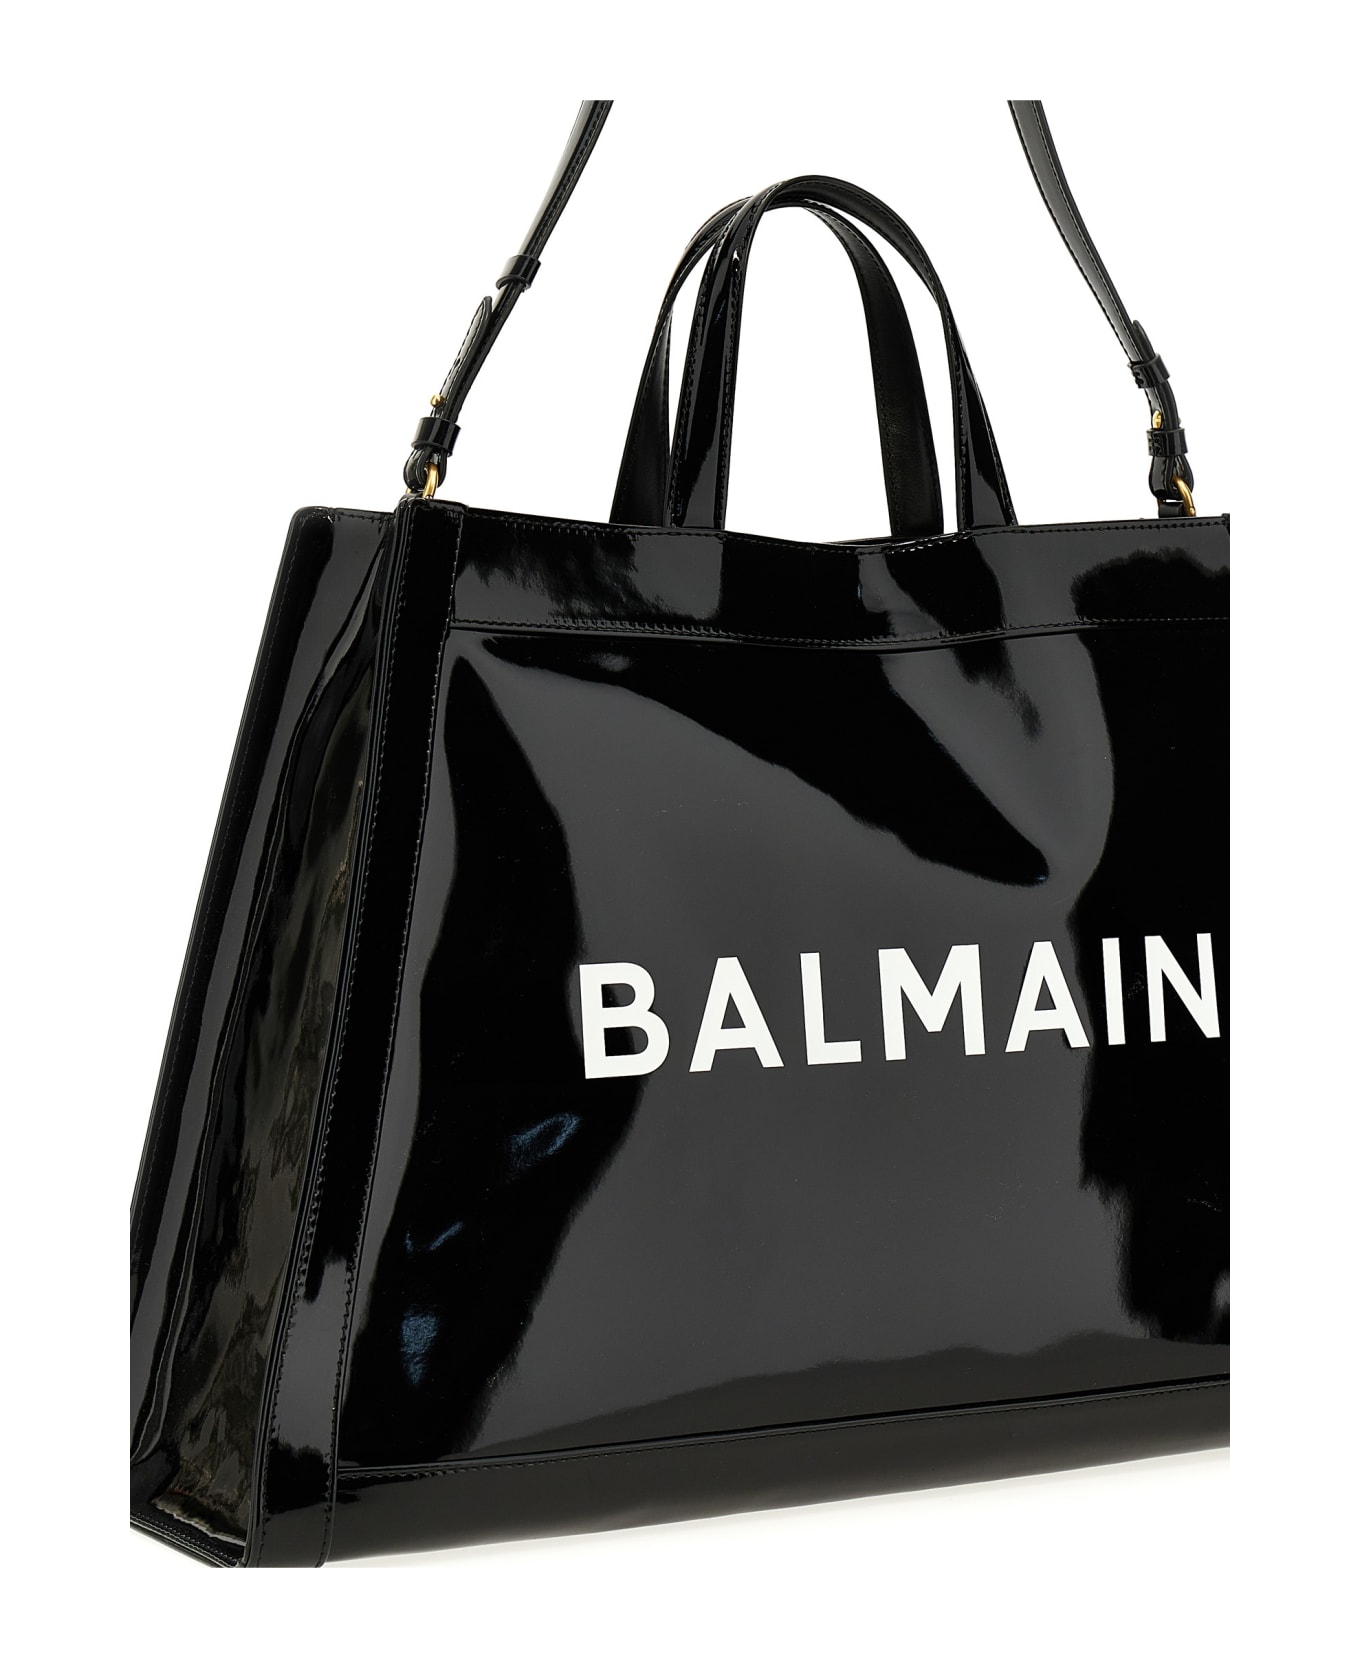 Balmain Olivier's Cabas' Shopping Bag - BLACK